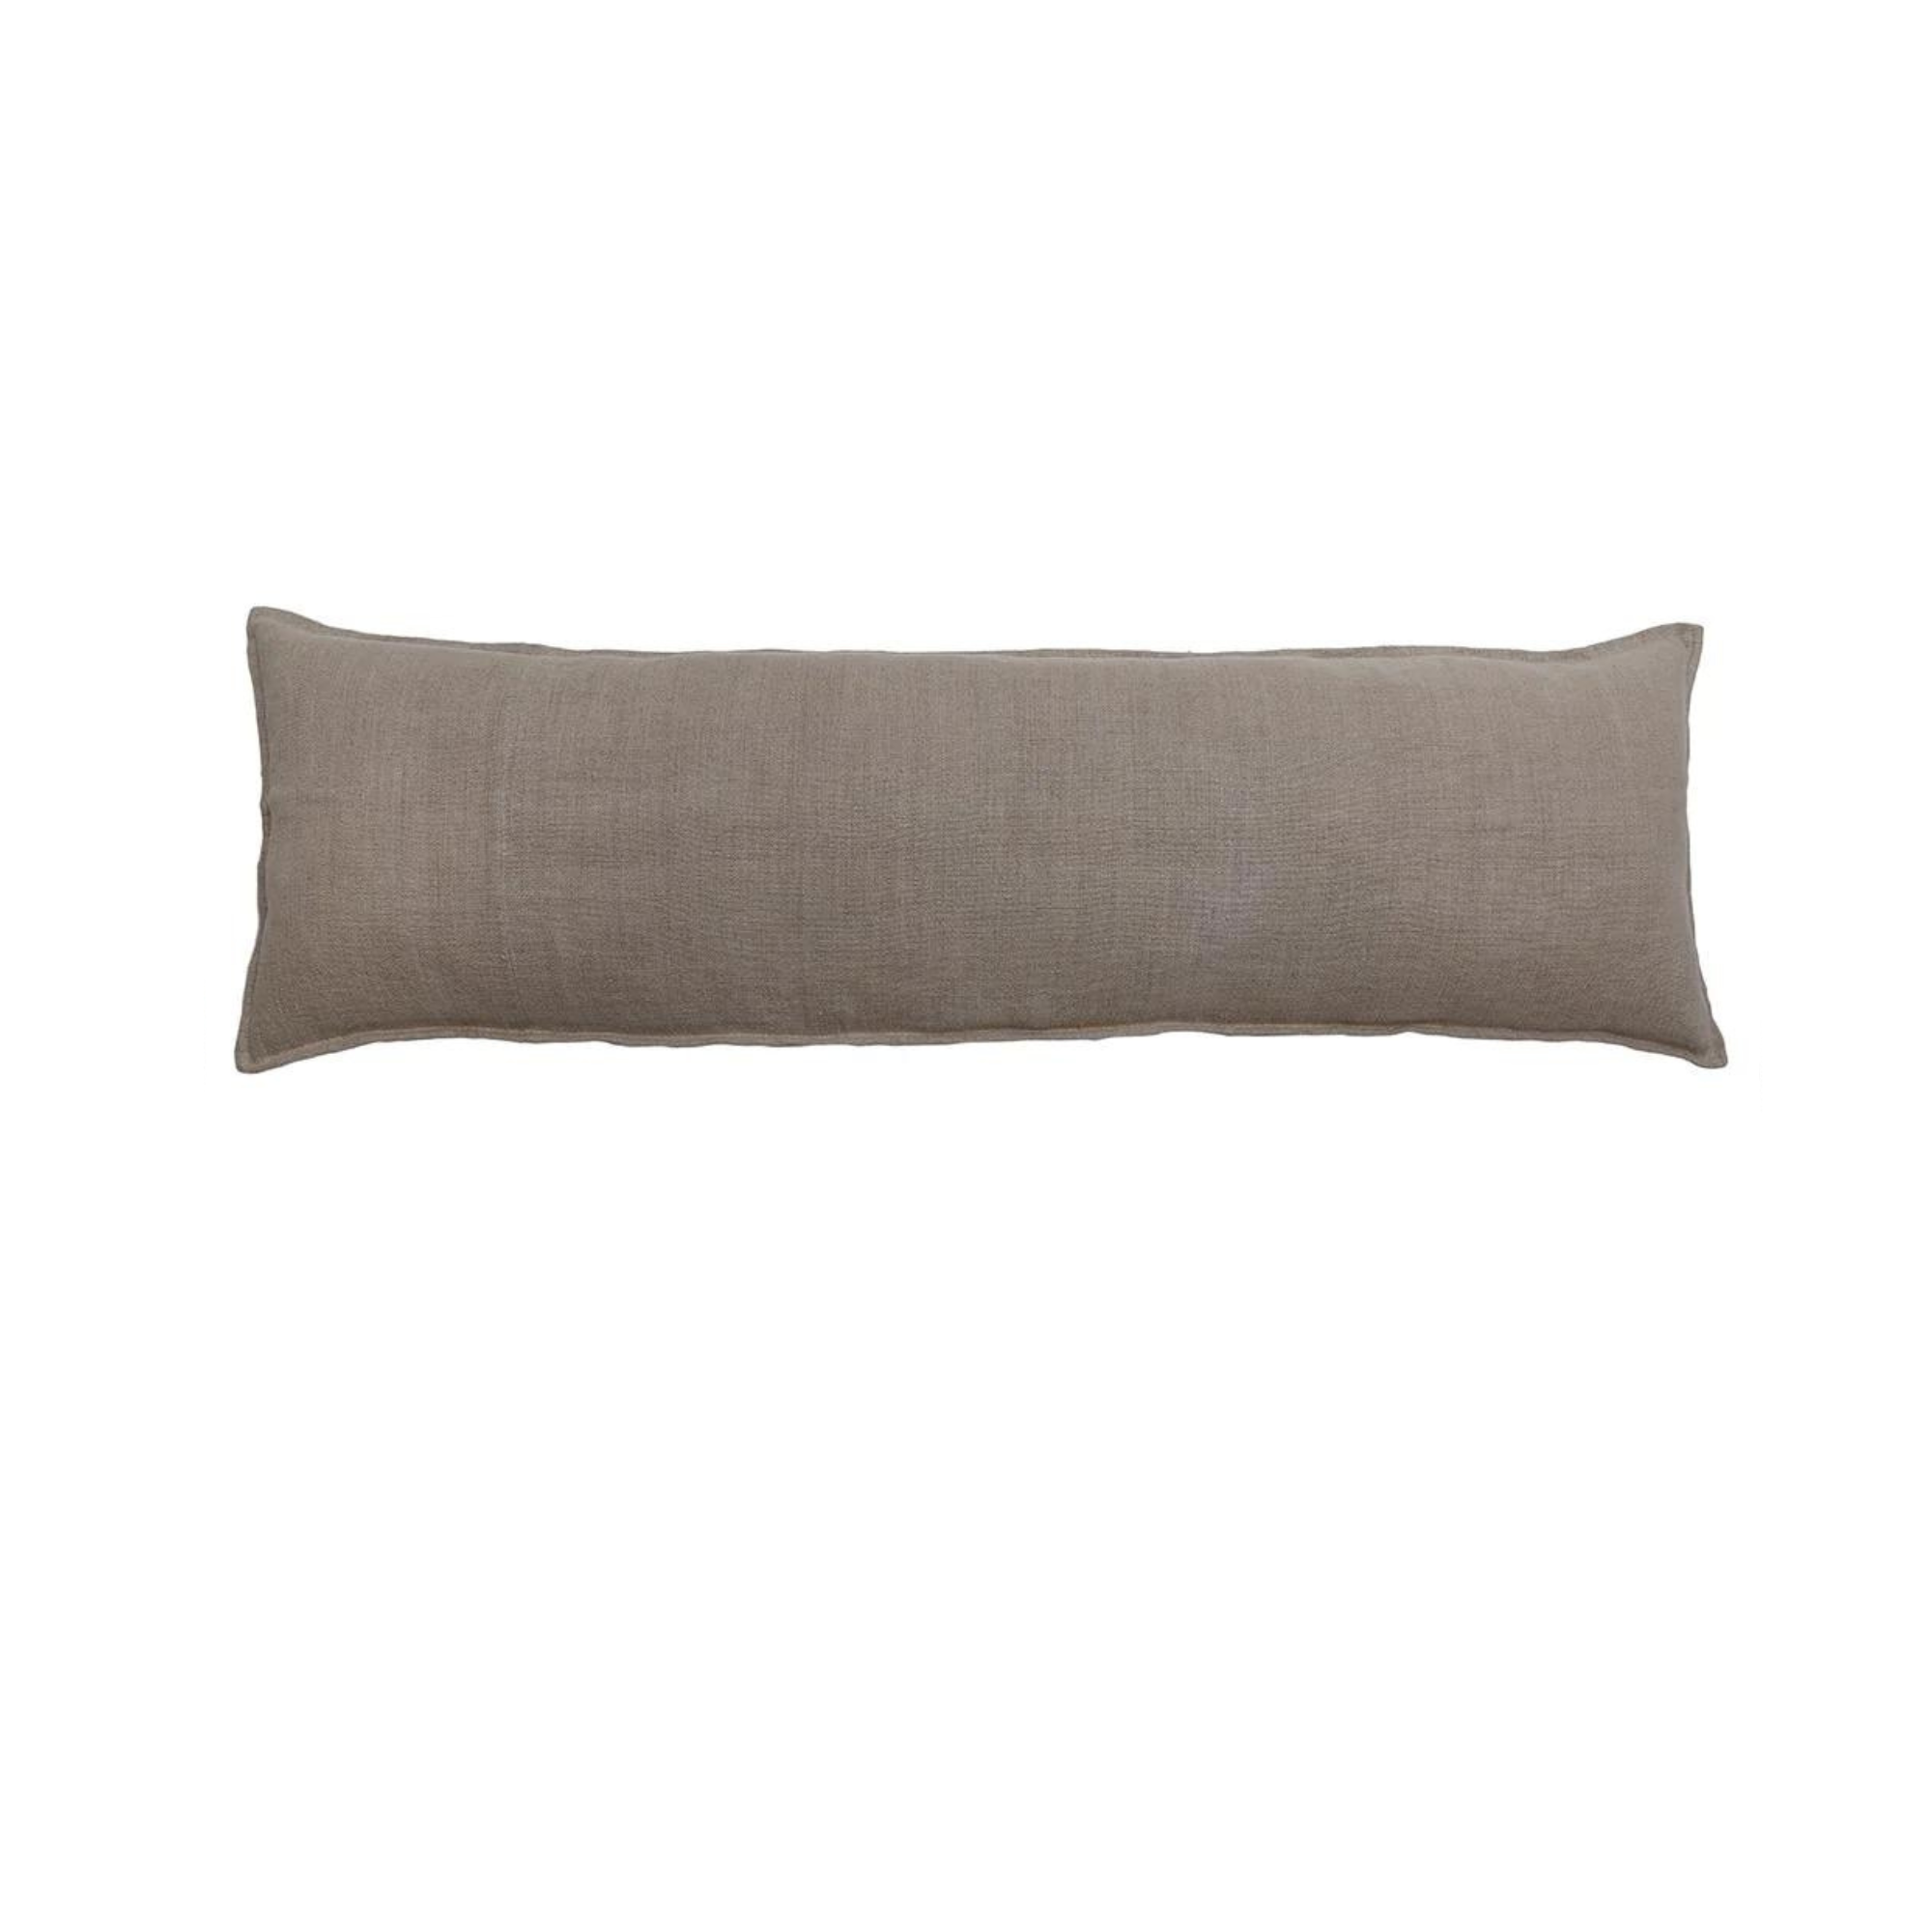 Montauk Body Pillow